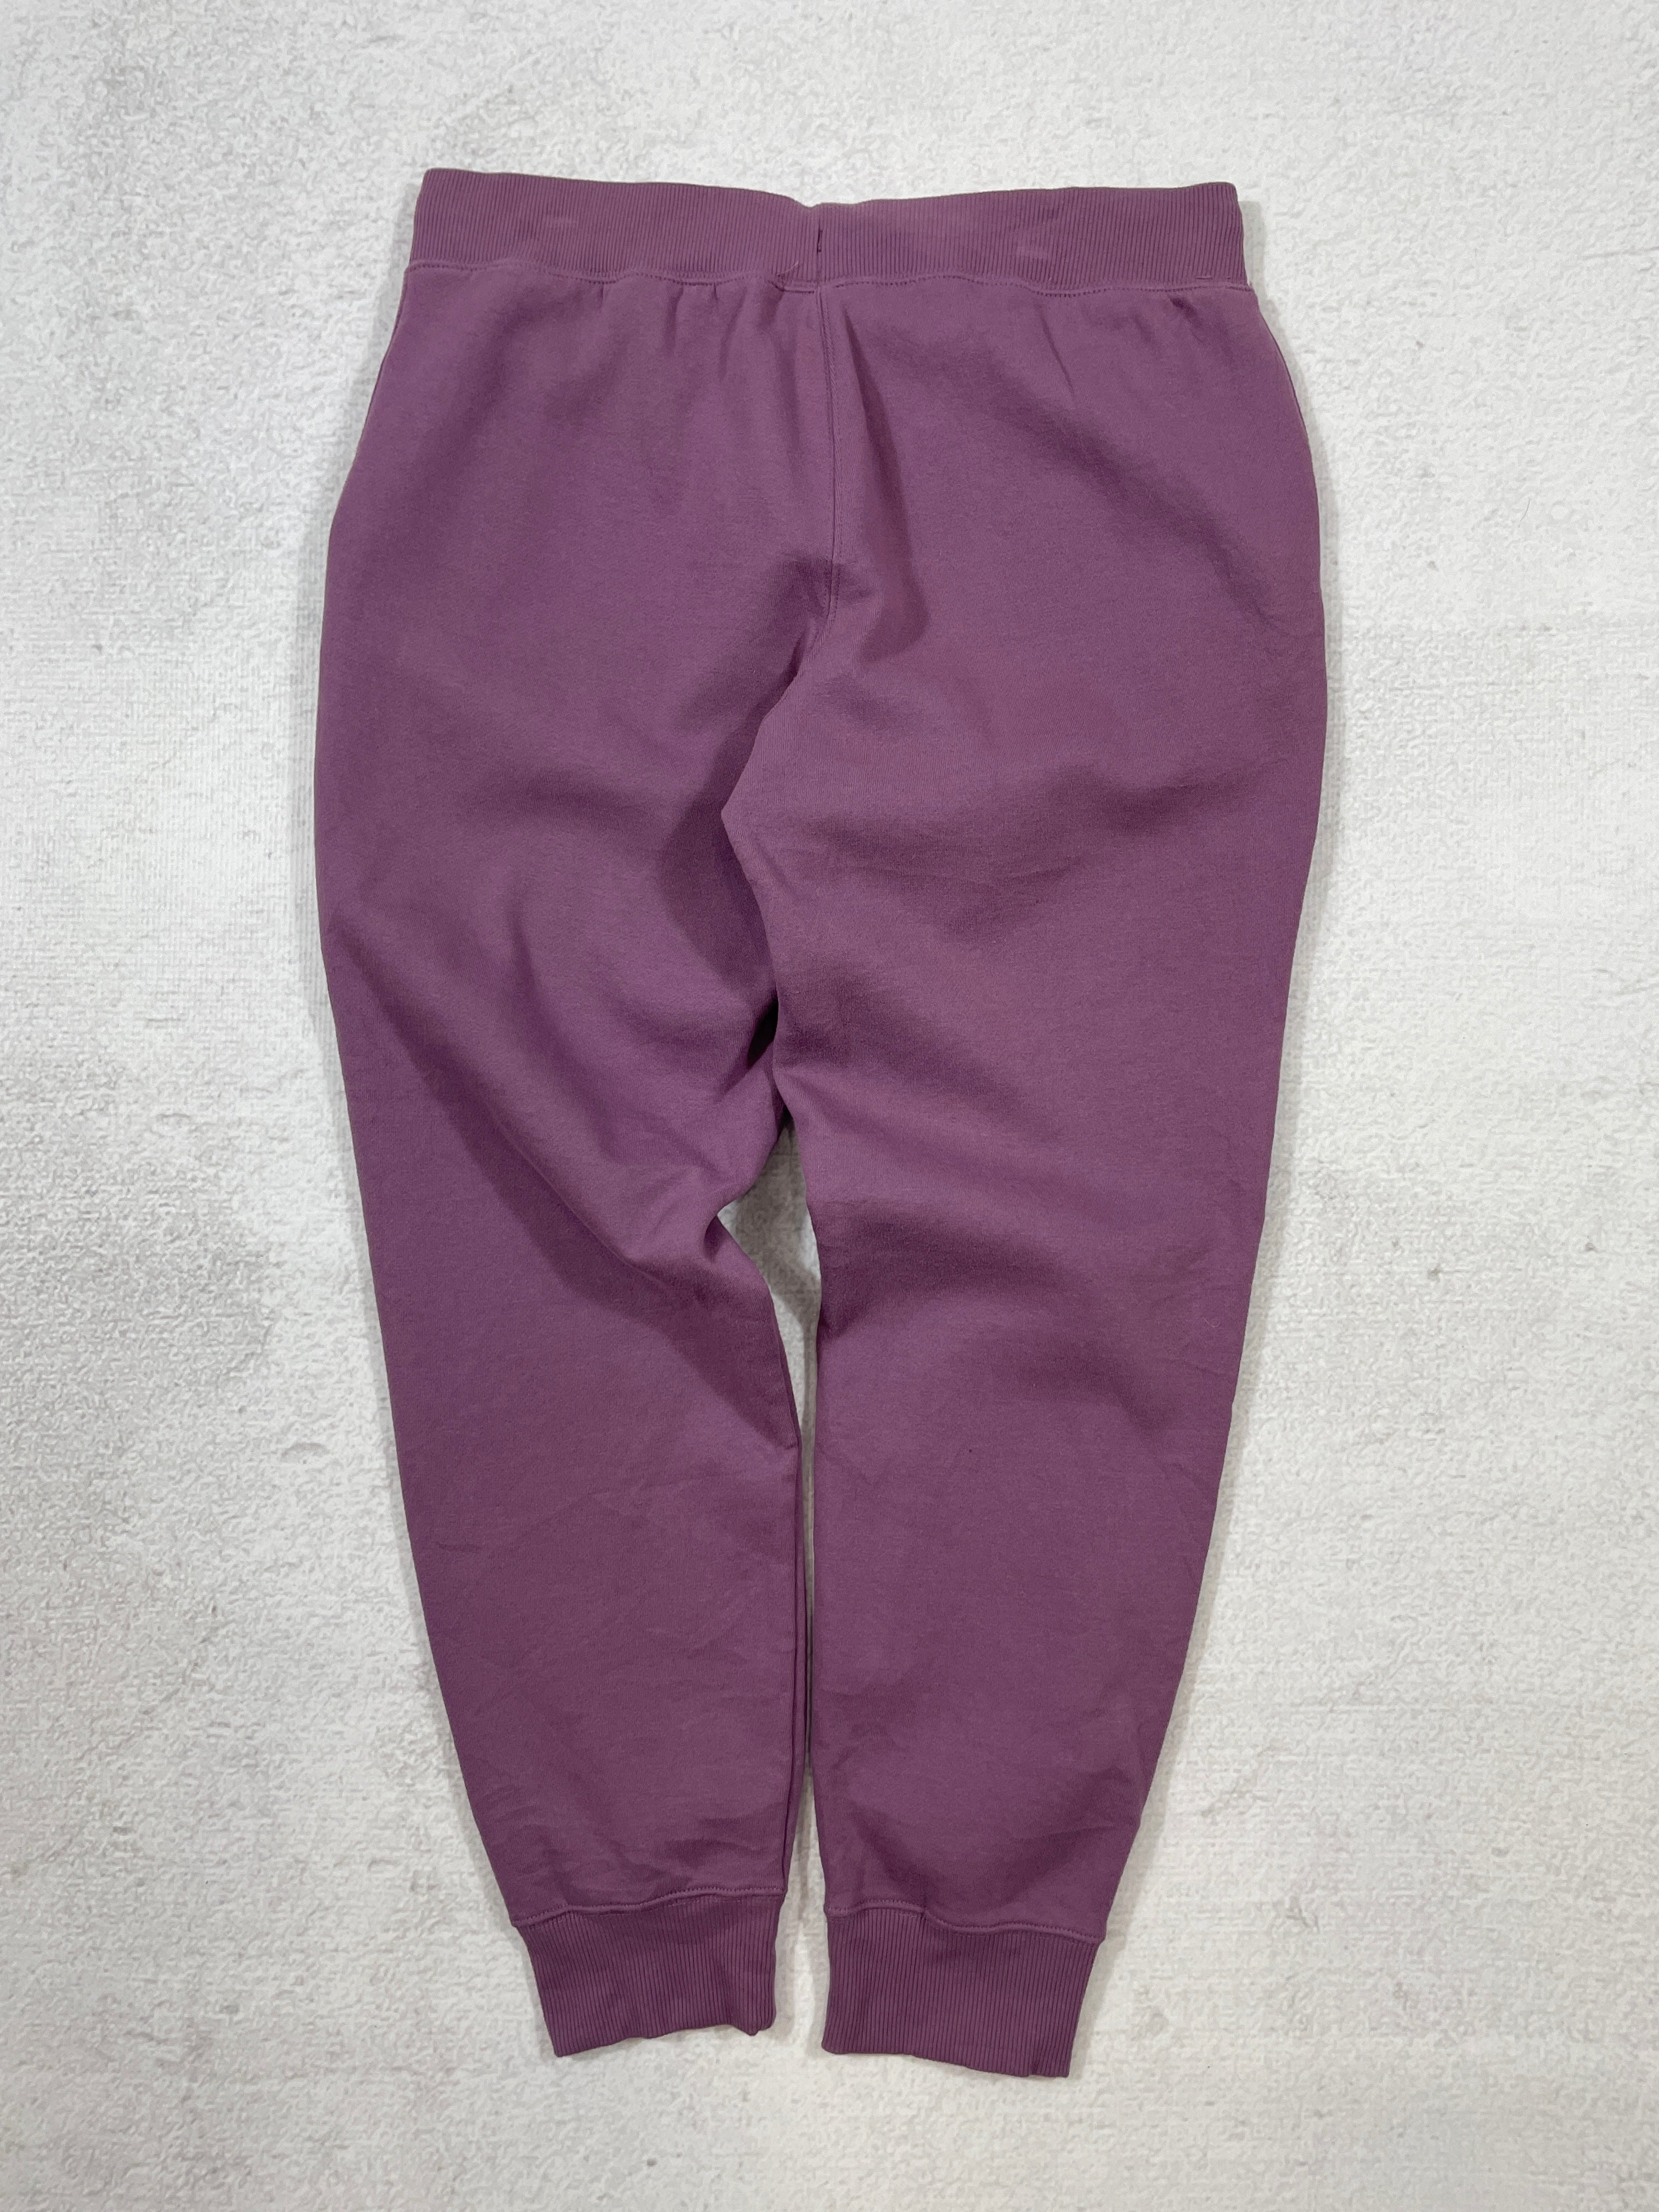 Vintage Champion Cuffed Sweatpants - Women's Medium